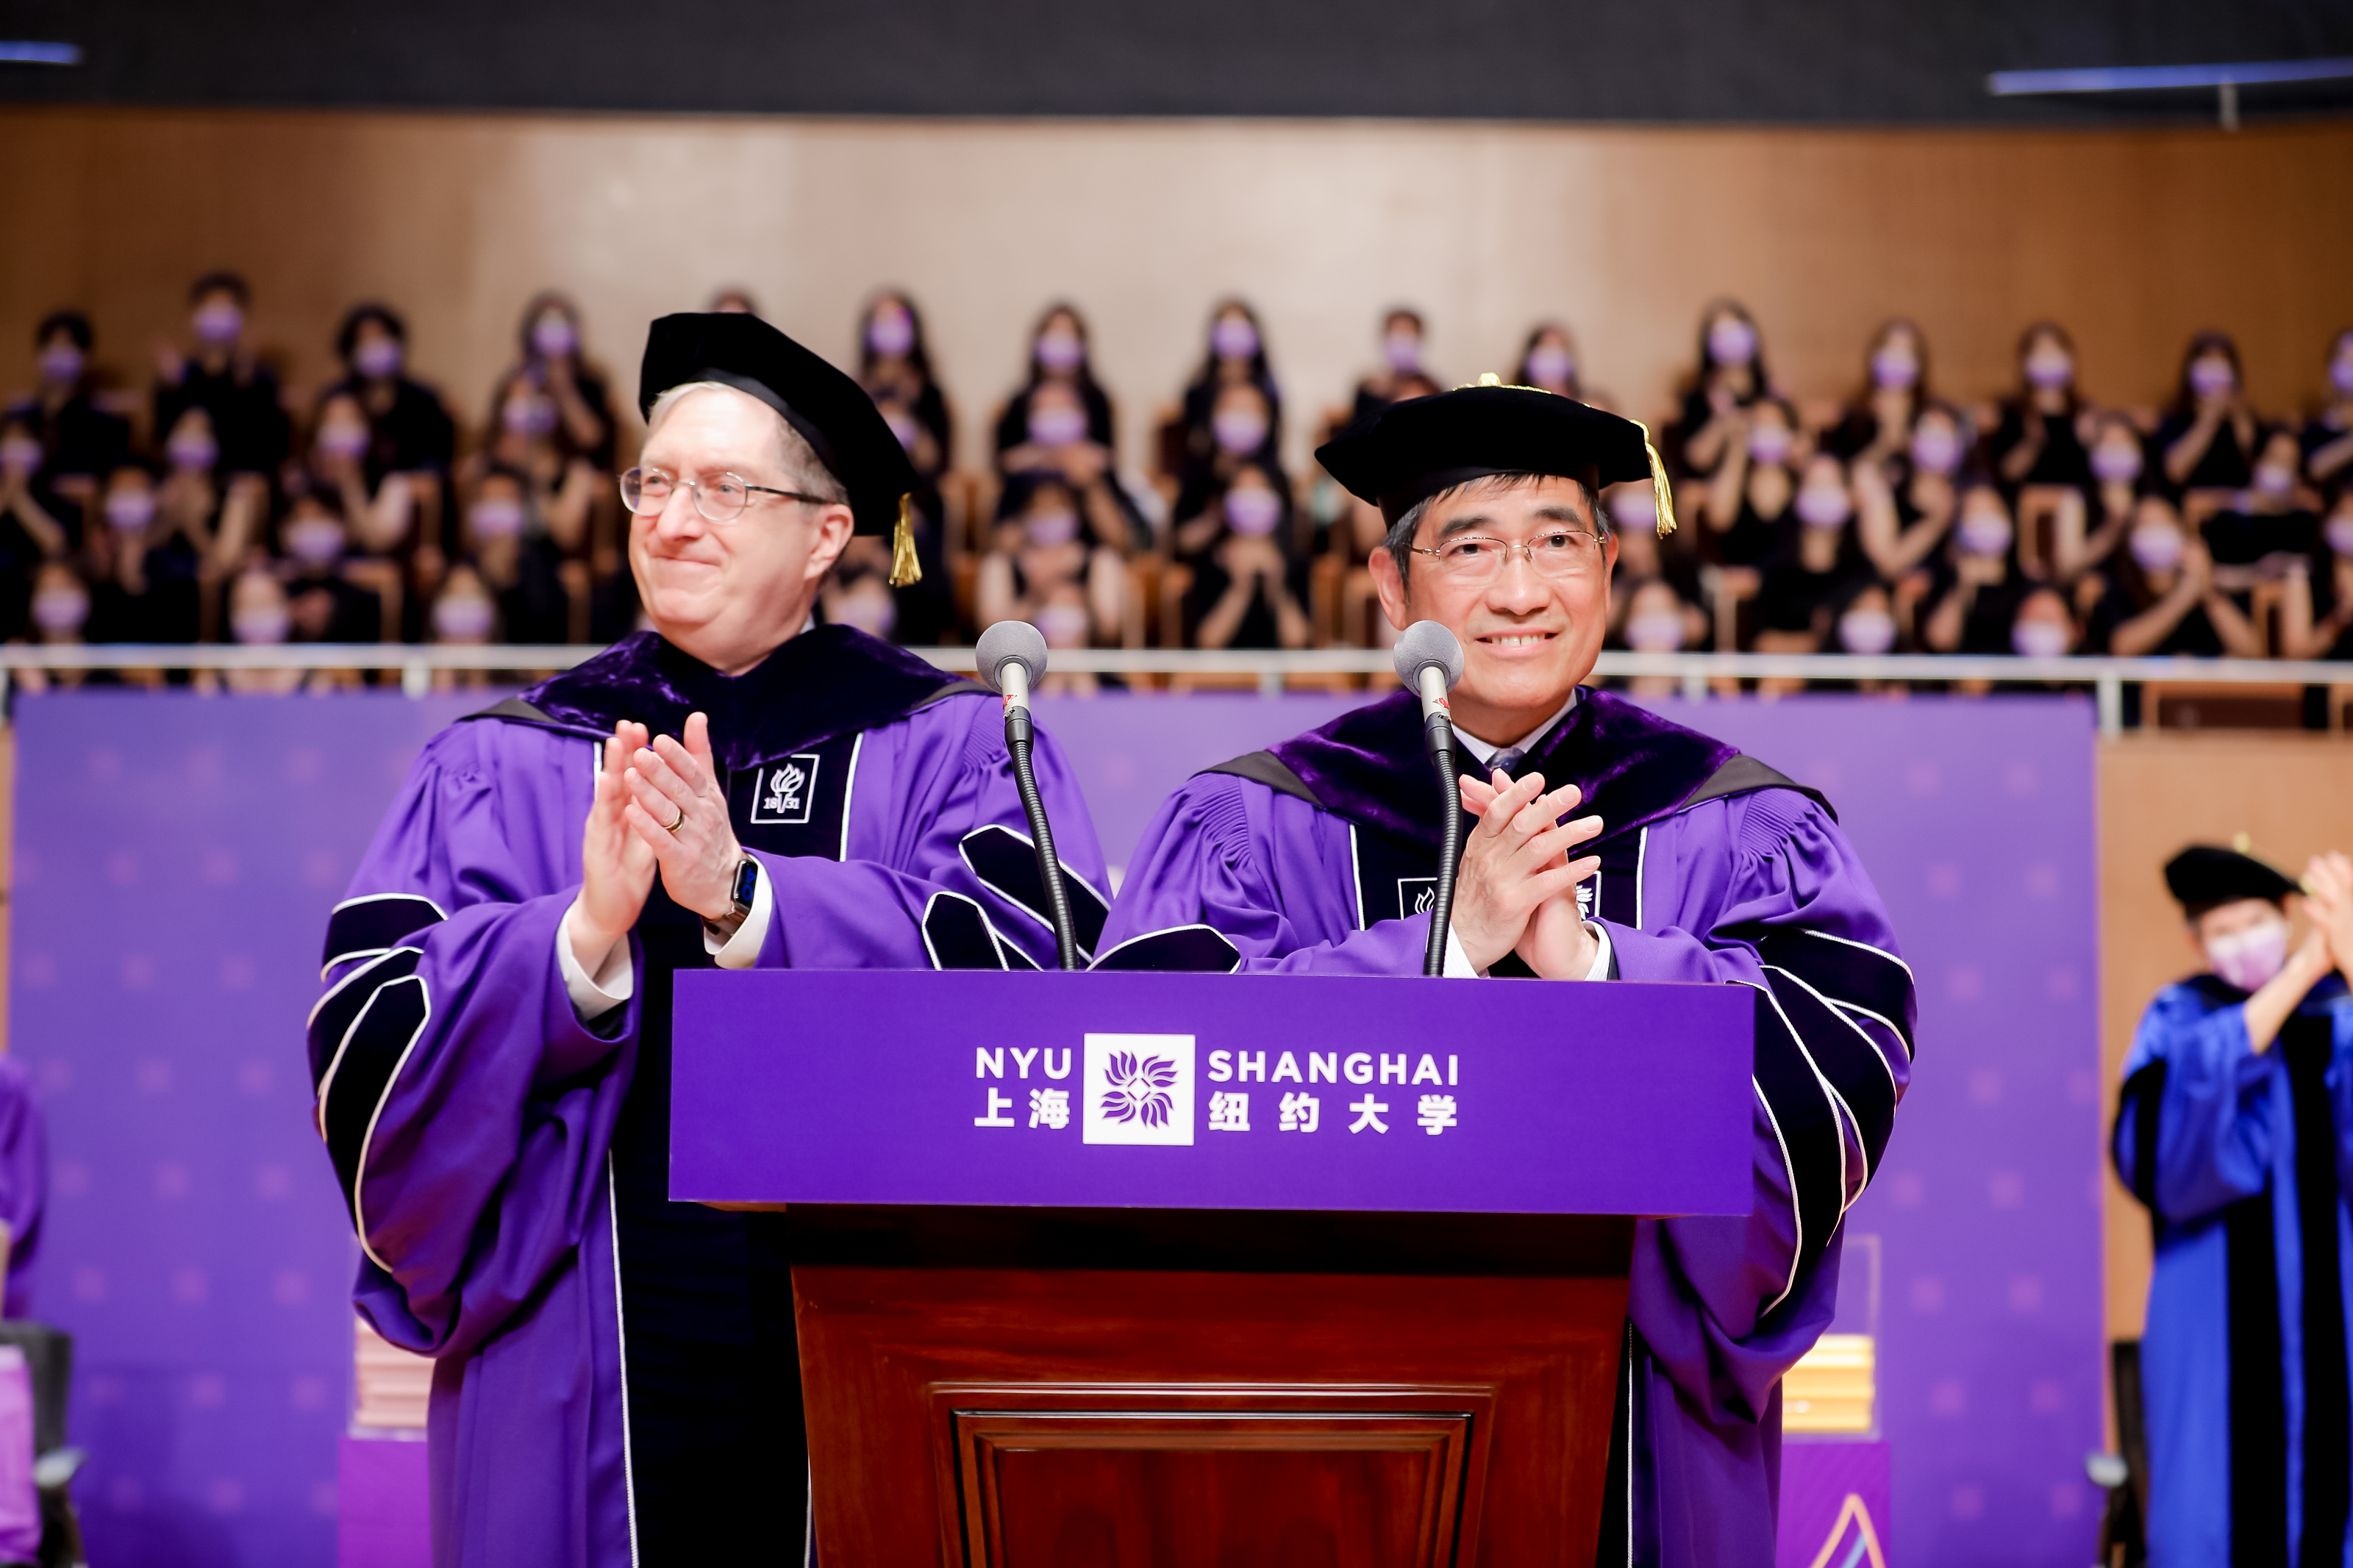 University leaders in purple robes applaud graduates at podium